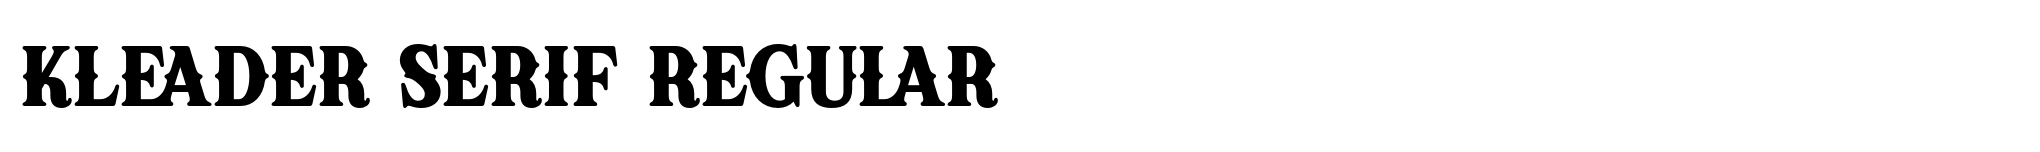 Kleader Serif Regular image